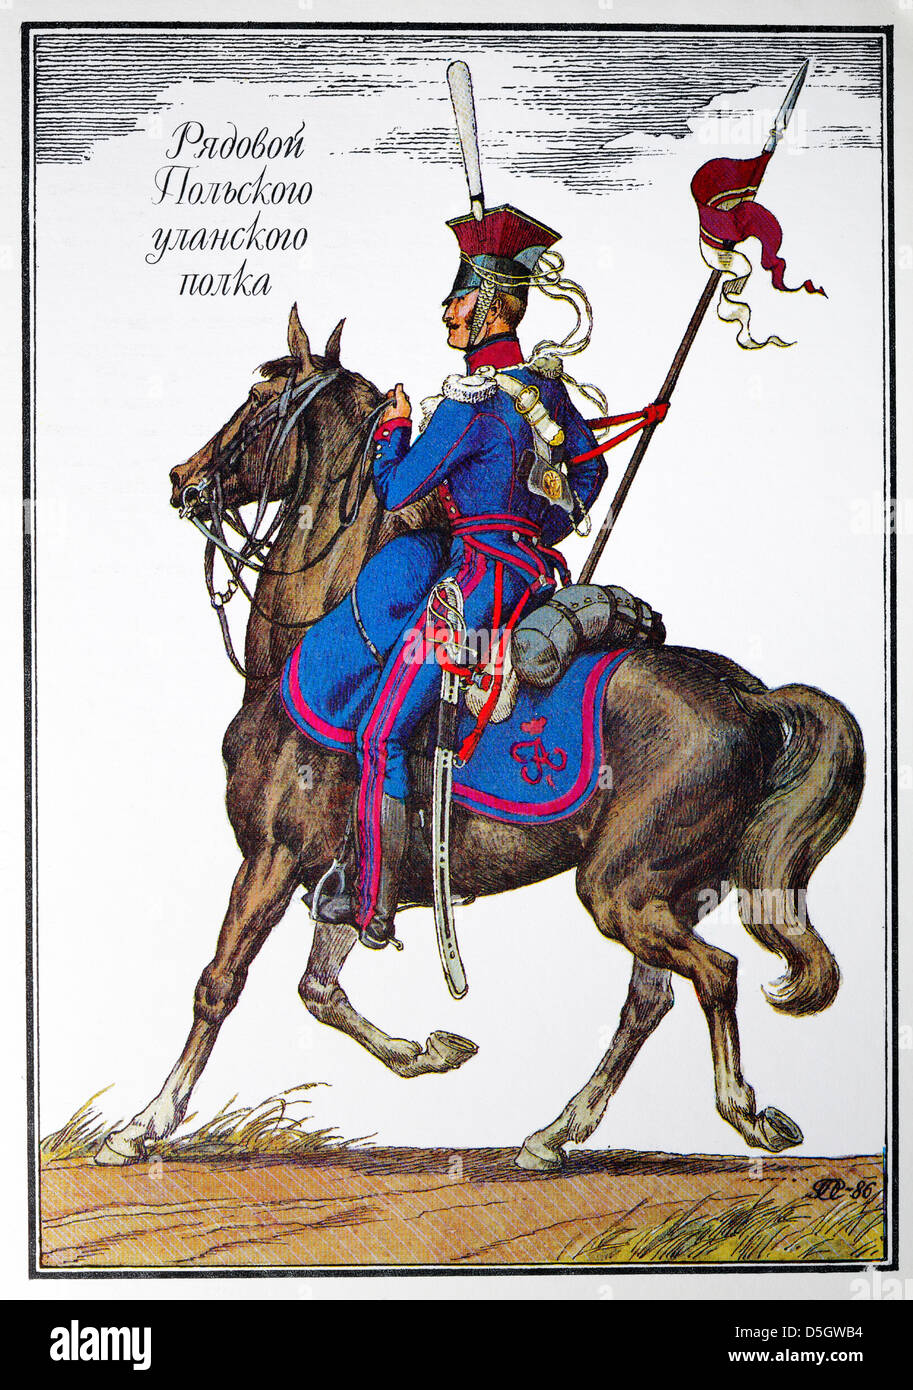     https://c8.alamy.com/comp/D5GWB4/uniform-of-private-of-polish-uhlan-regiment-of-russian-army-1812-postcard-D5GWB4.jpg   